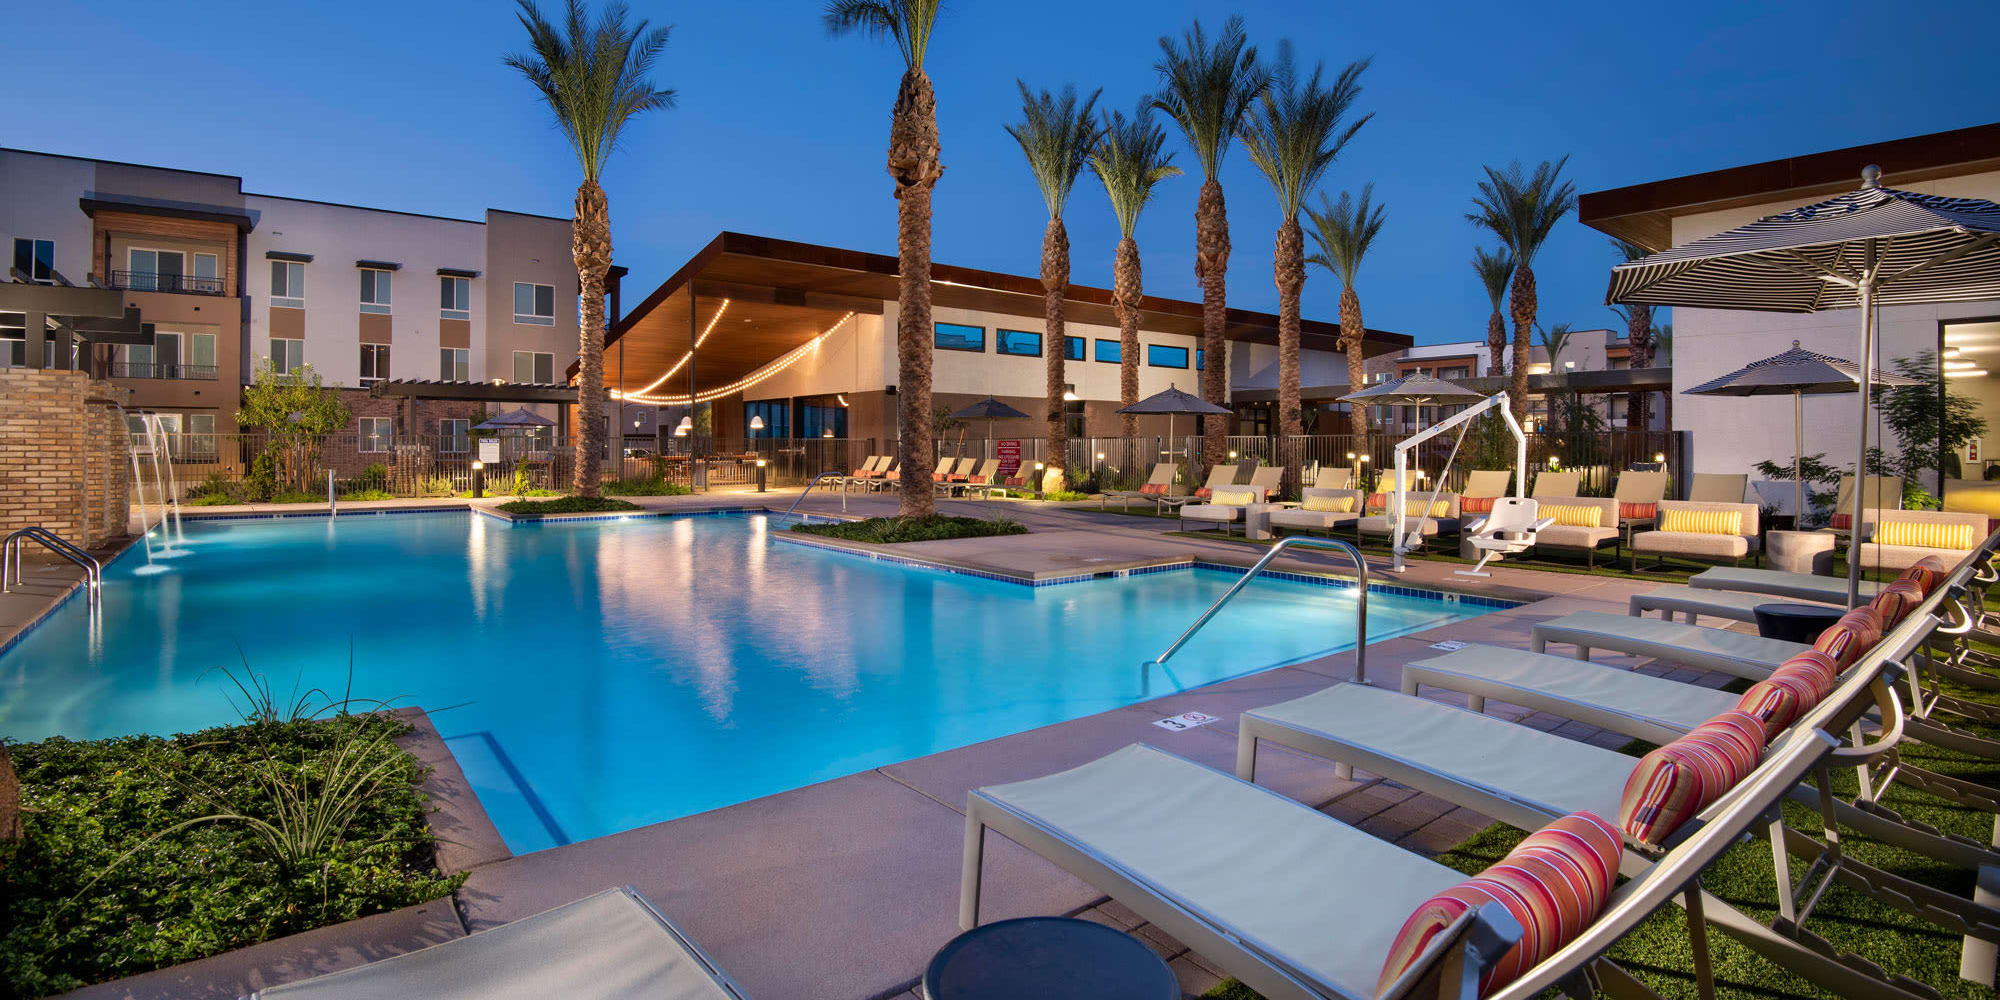 Luxury apartments in Gilbert, Arizona at Aiya